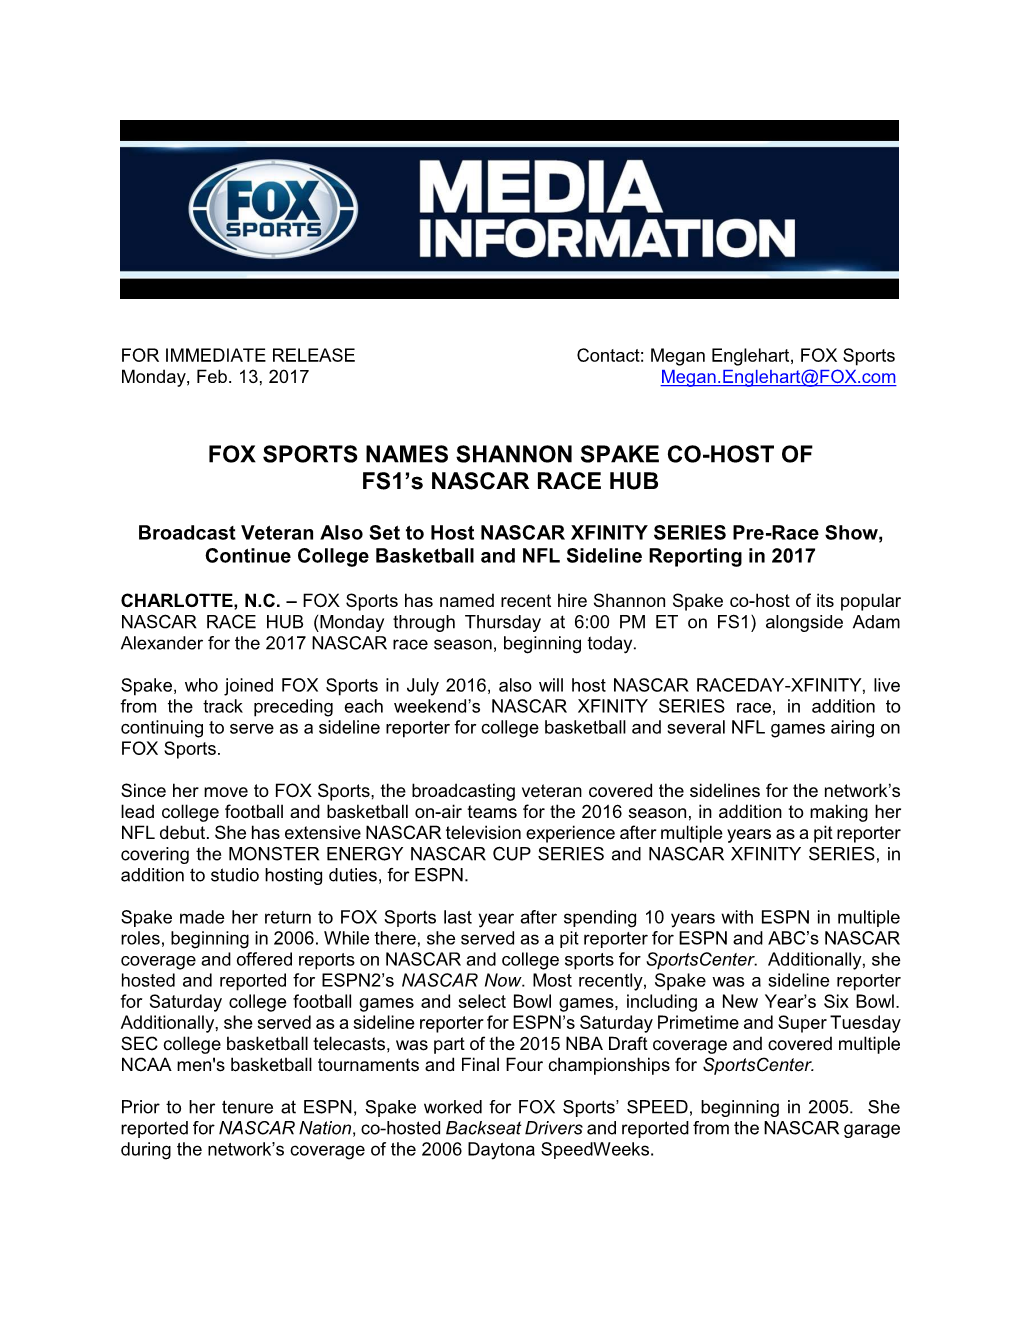 FOX Sports Names Shannon Spake Co-Host of FS1's NASCAR